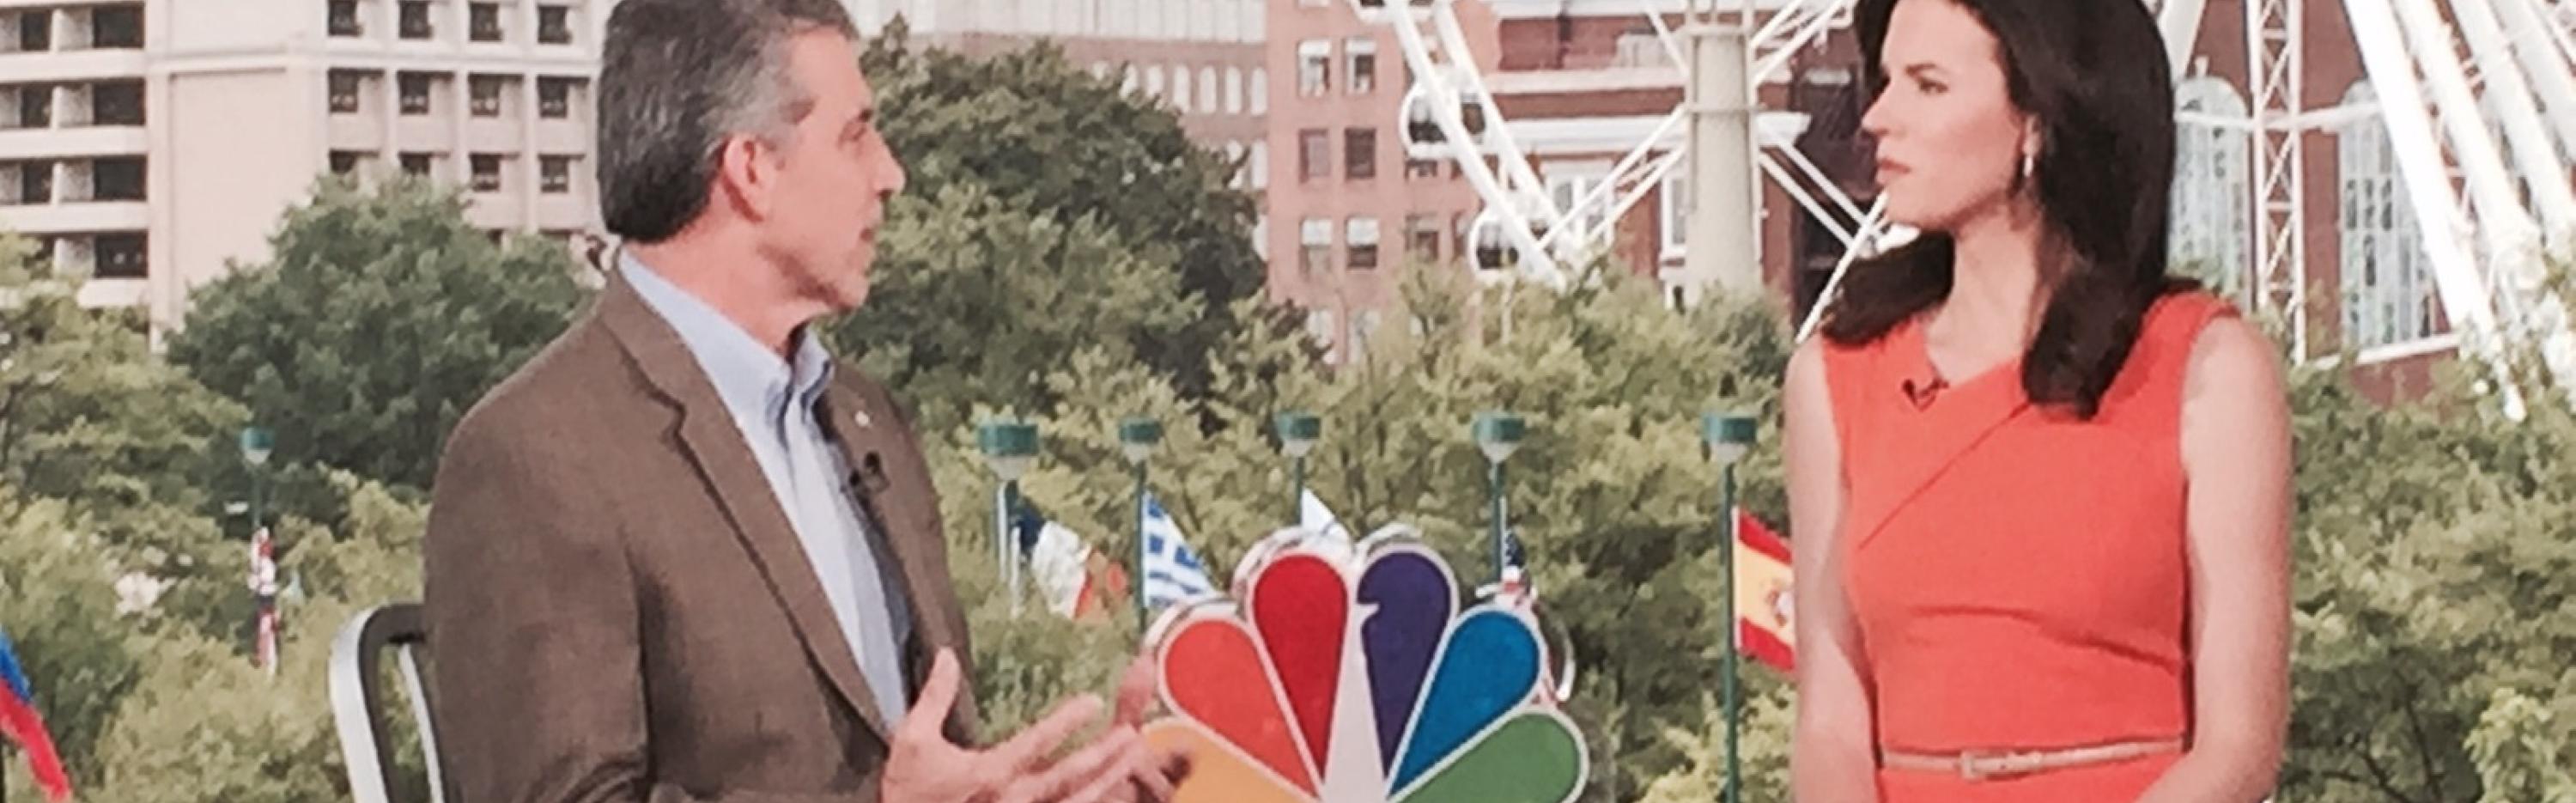 CEO Craig Menear as a guest on CNBC's Closing Bell